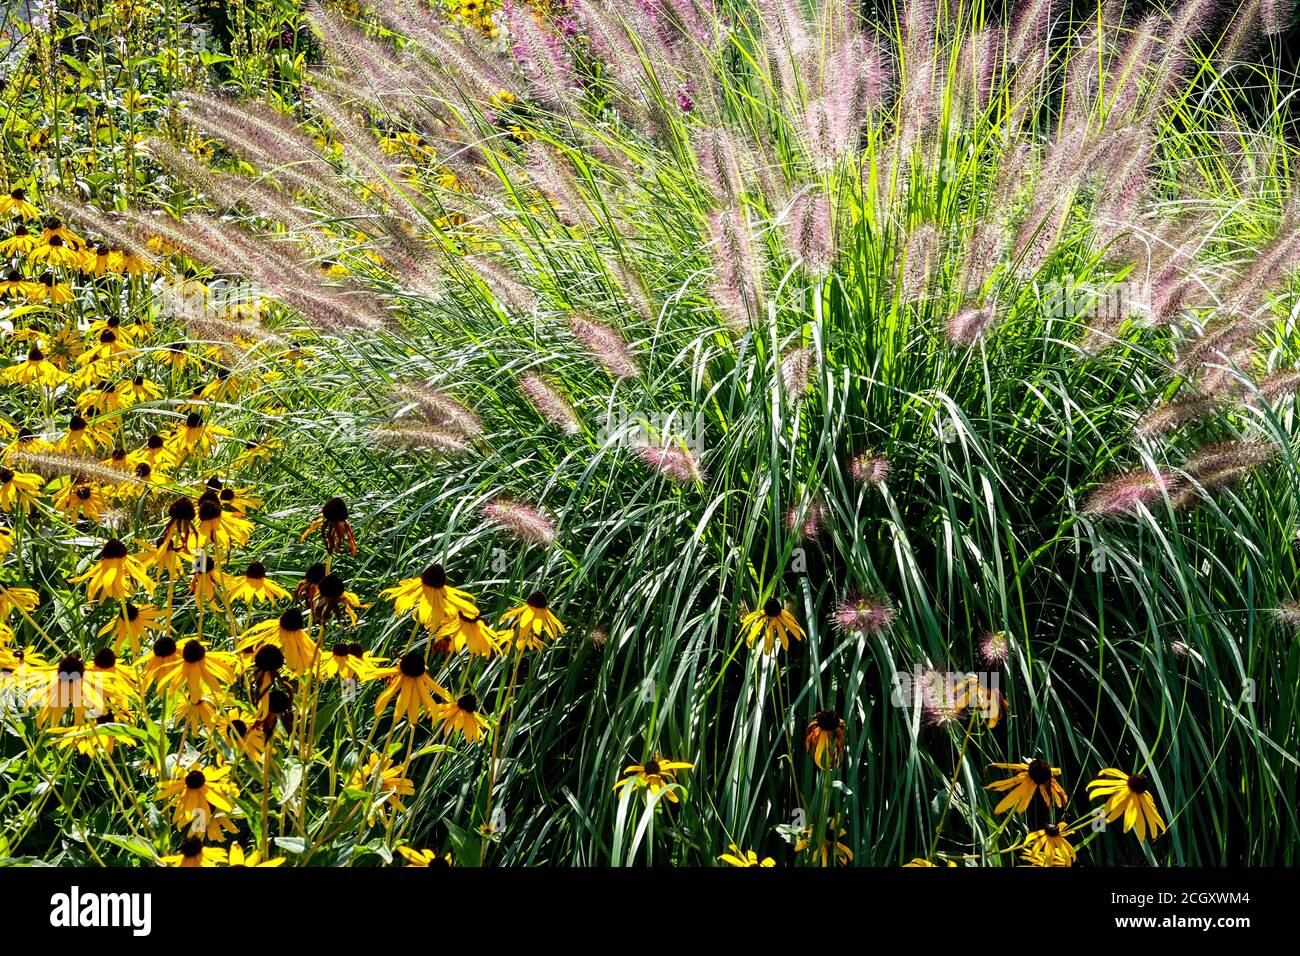 Fountain Grass Rudbeckia Goldsturm autumn garden coming September flowers in the garden border, a clump of ornamental grasses Pennisetum alopecuroides Stock Photo